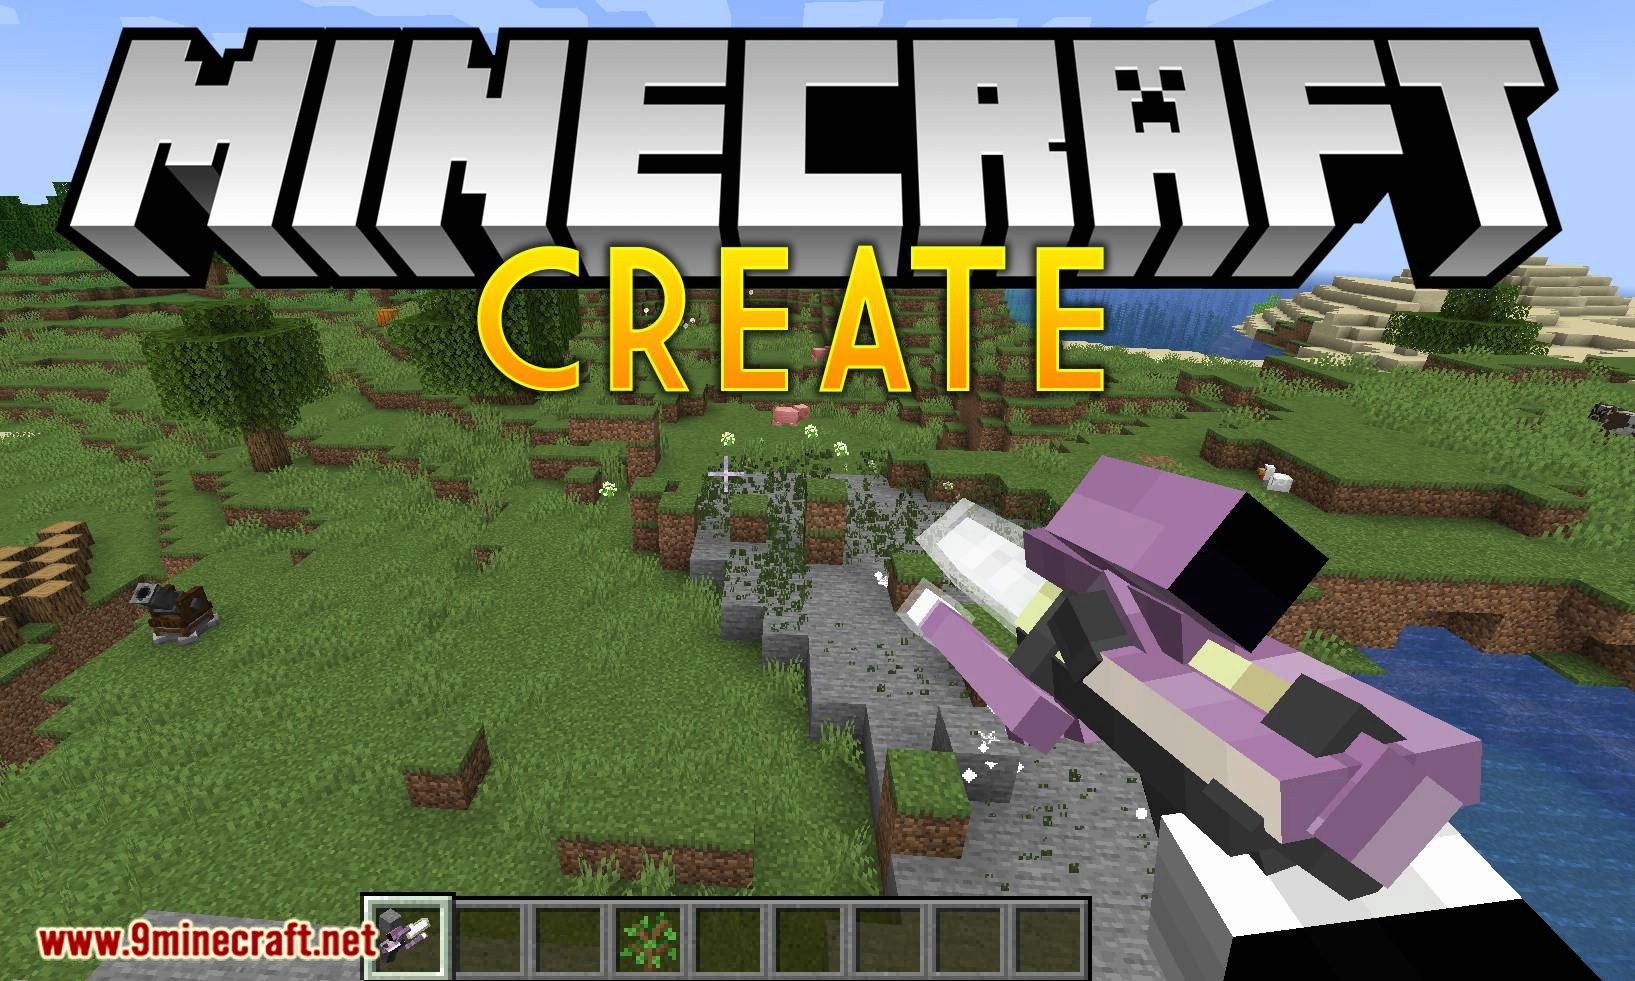 How To Make A Minecraft Mod